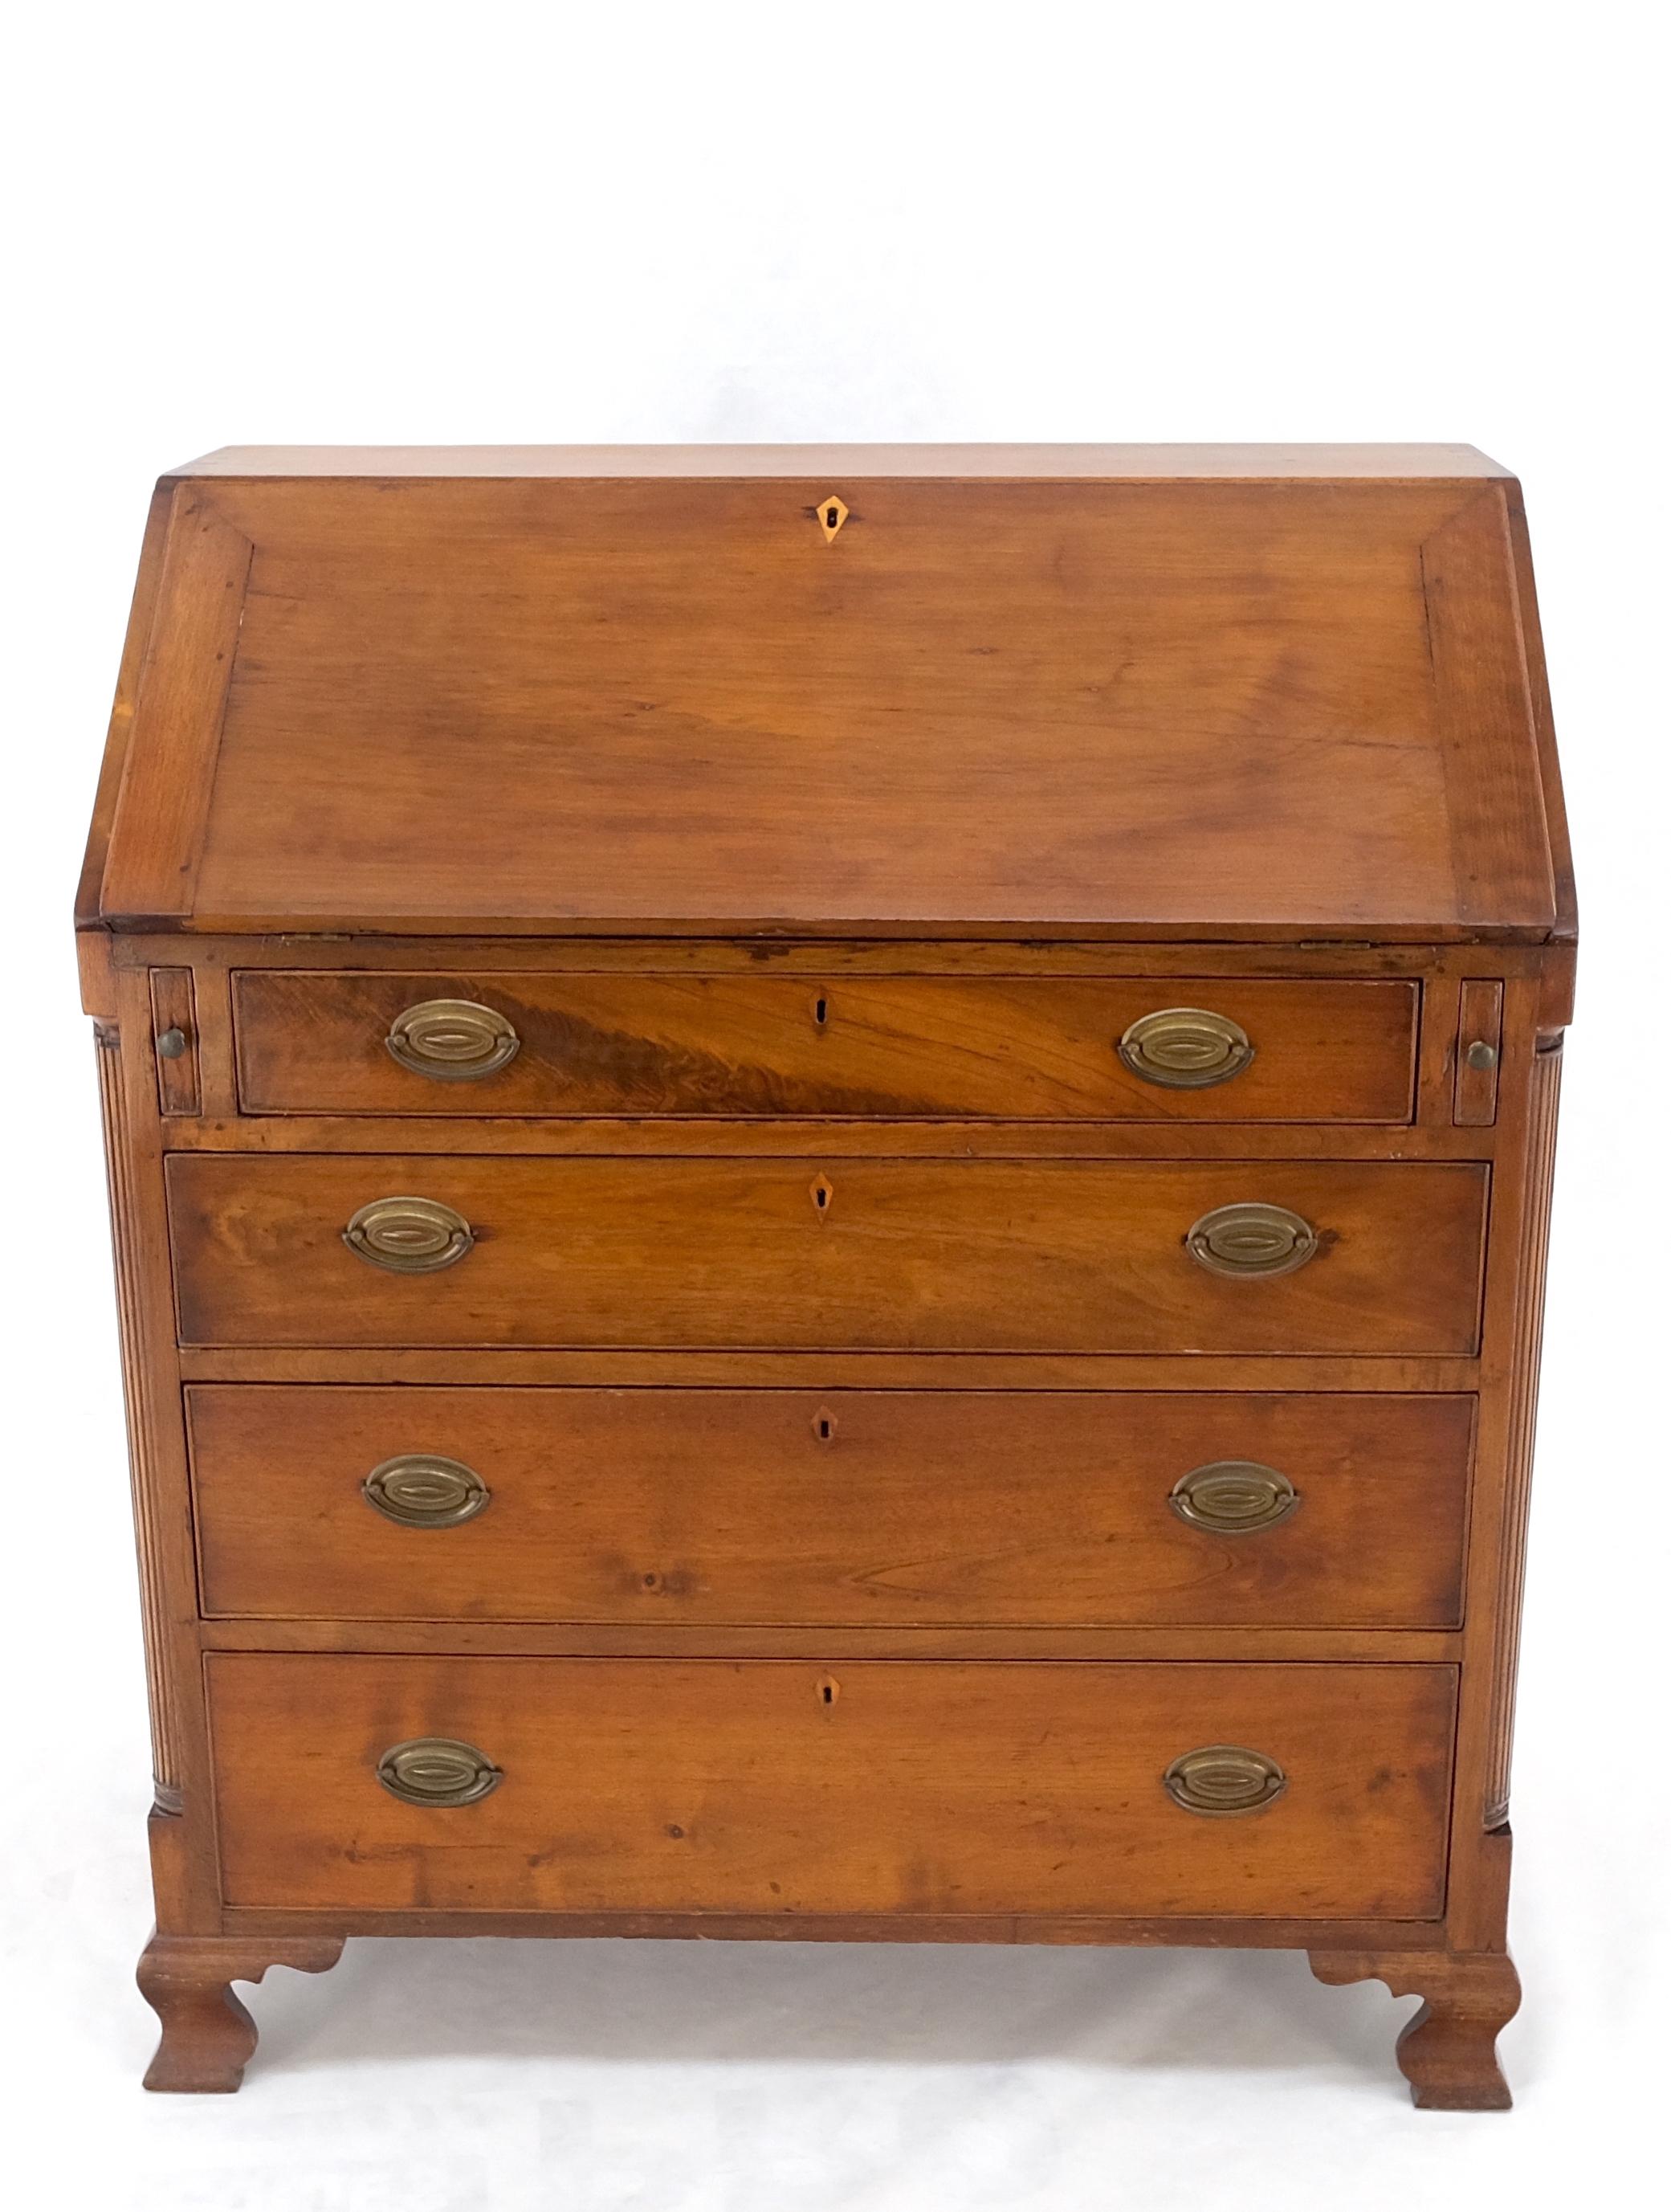 Antique 19th Century Dovetail Joints Secretary Drop Front Desk w Drawers Dresser For Sale 4